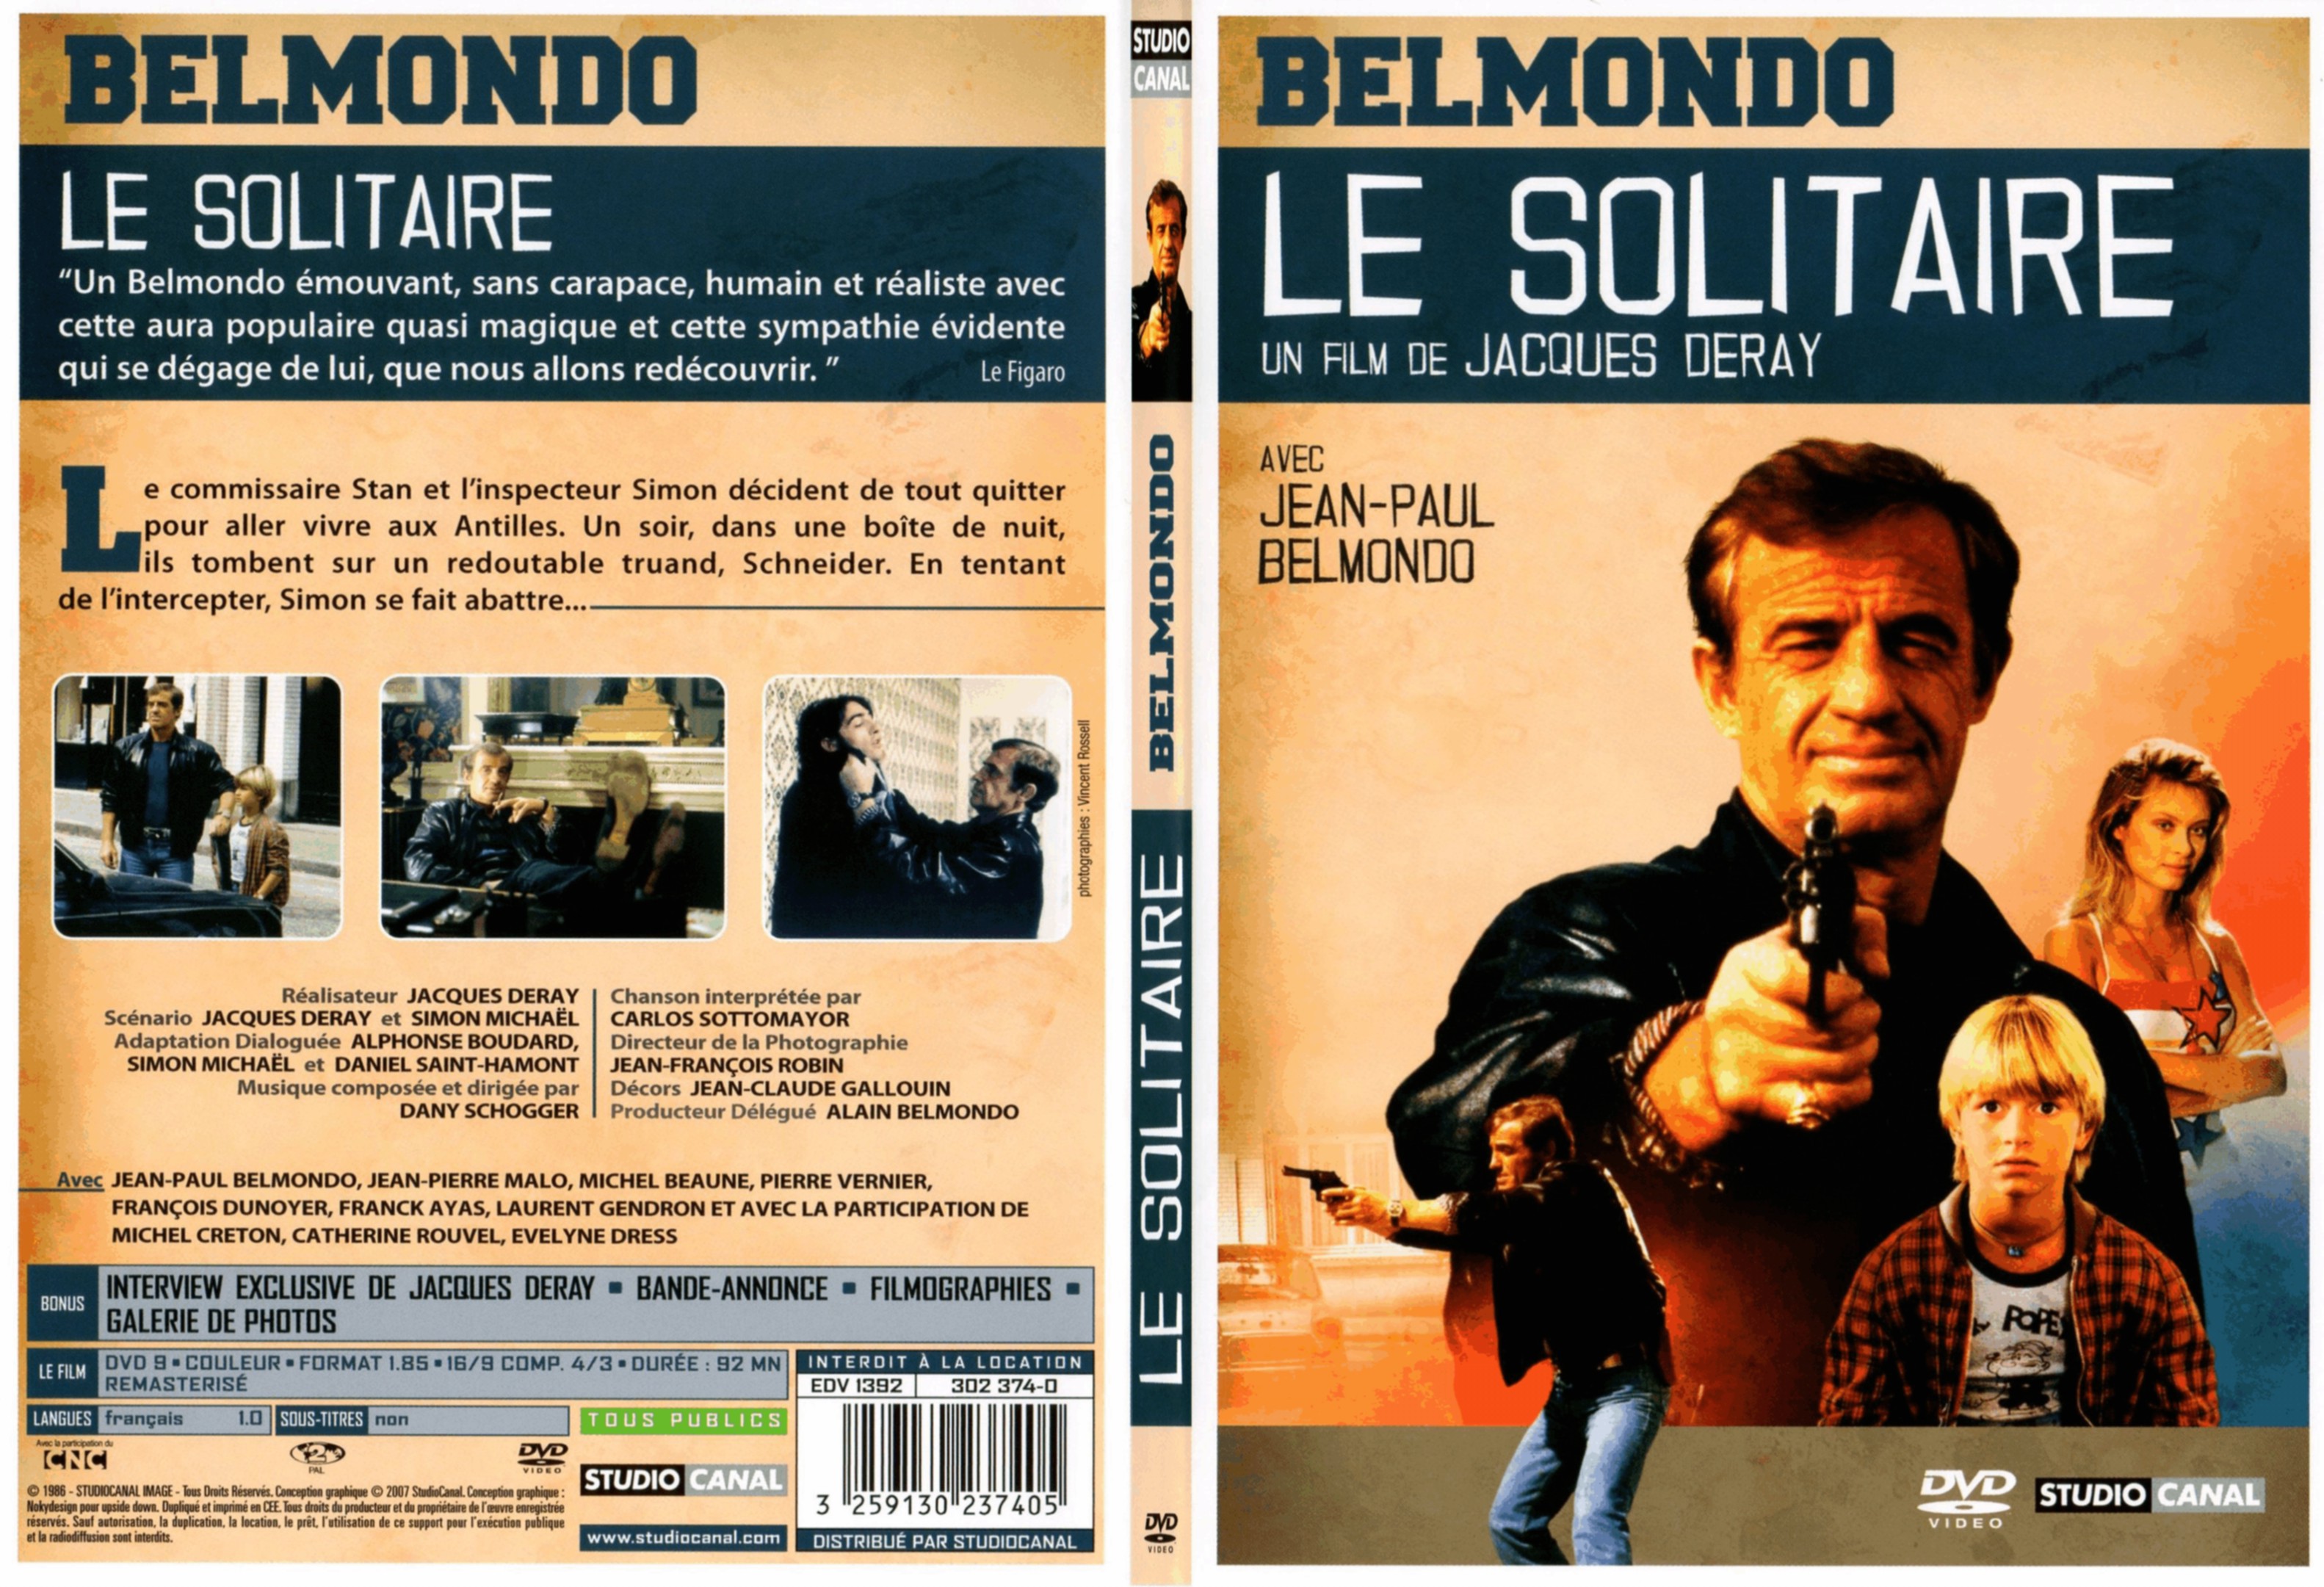 Jaquette DVD Le solitaire (Belmondo) - SLIM